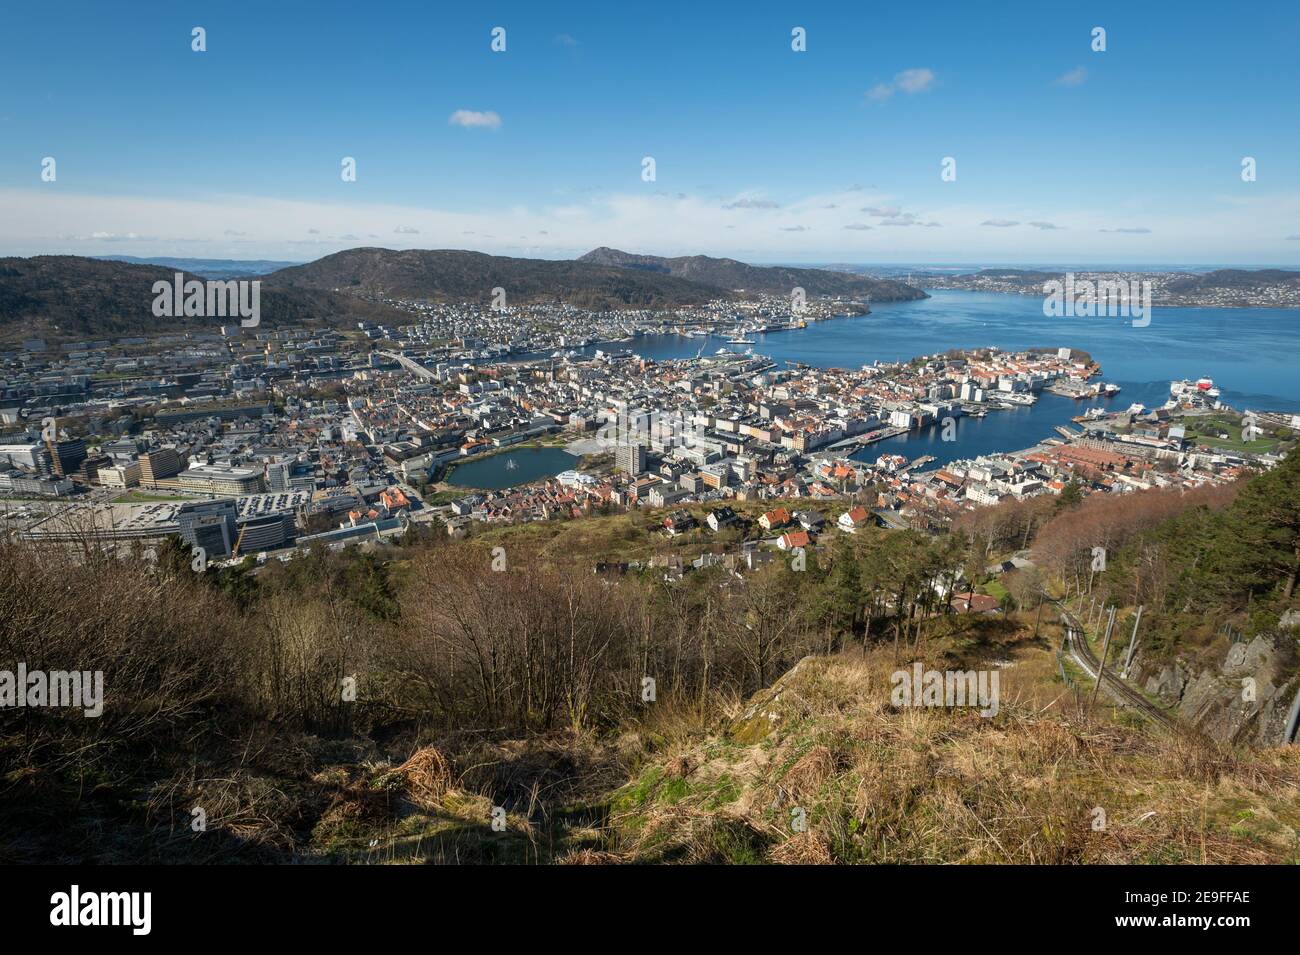 The view of Bergen and Vågen from Mount Fløyen, Norway. Stock Photo